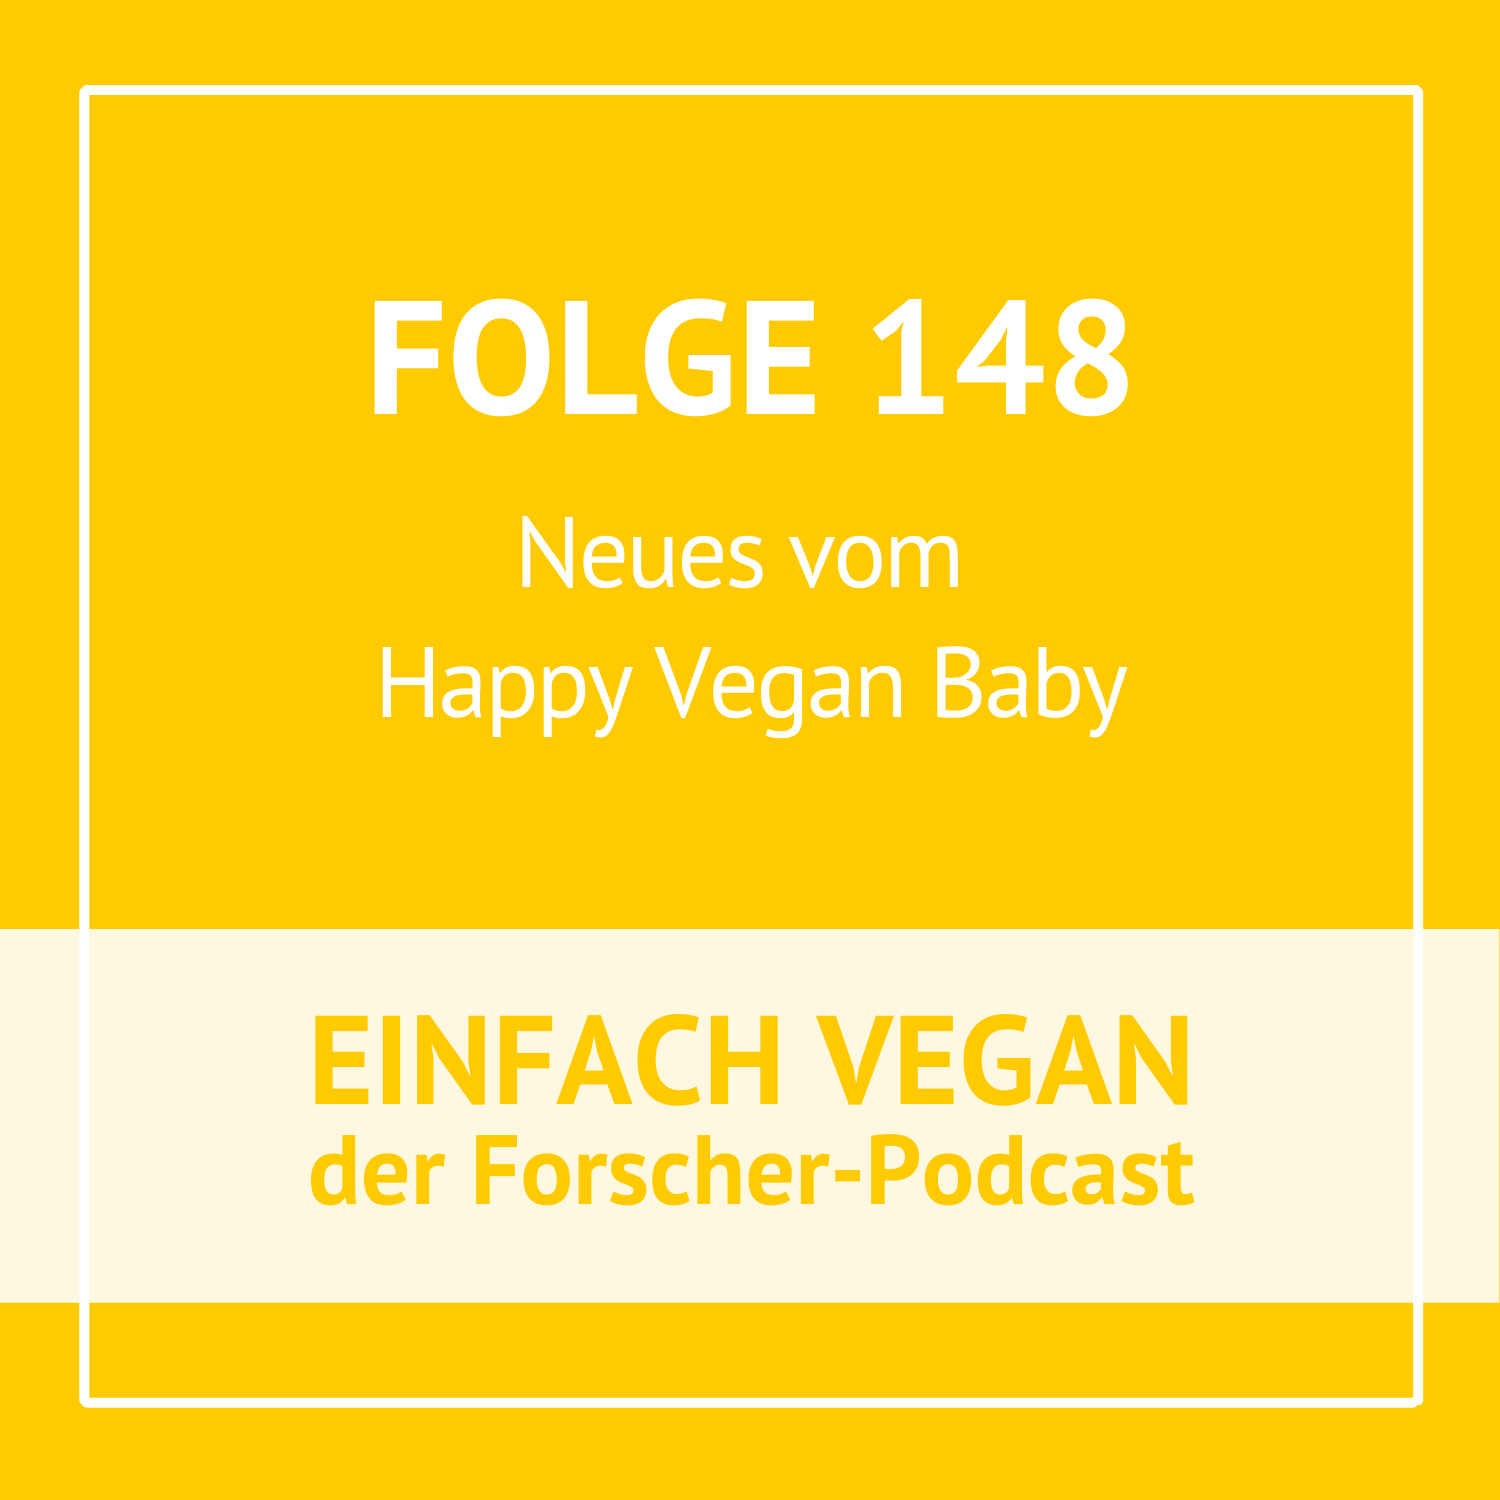 Folge 148 - Neues vom Happy Vegan Baby